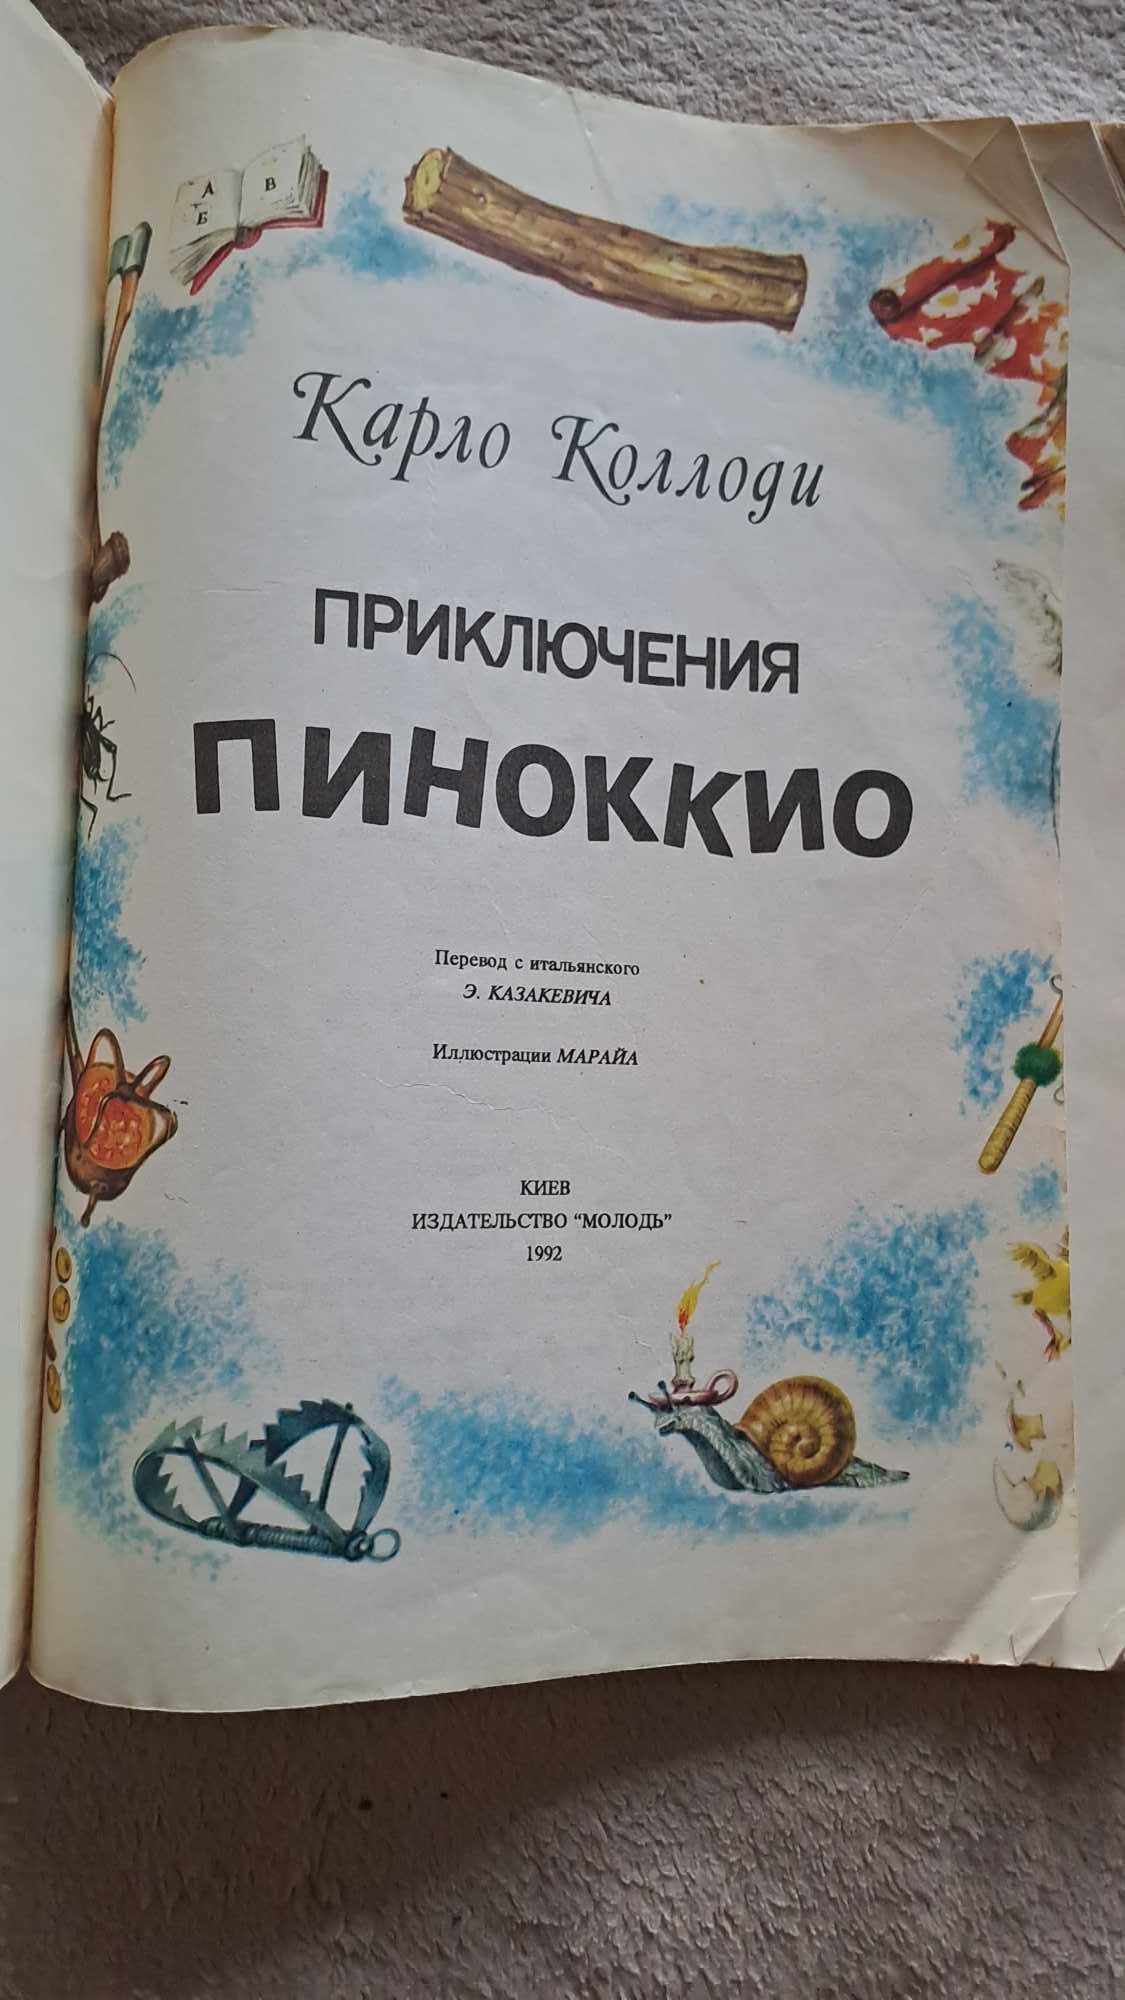 Приключения Пиноккио иллюстрации Л.Марайя